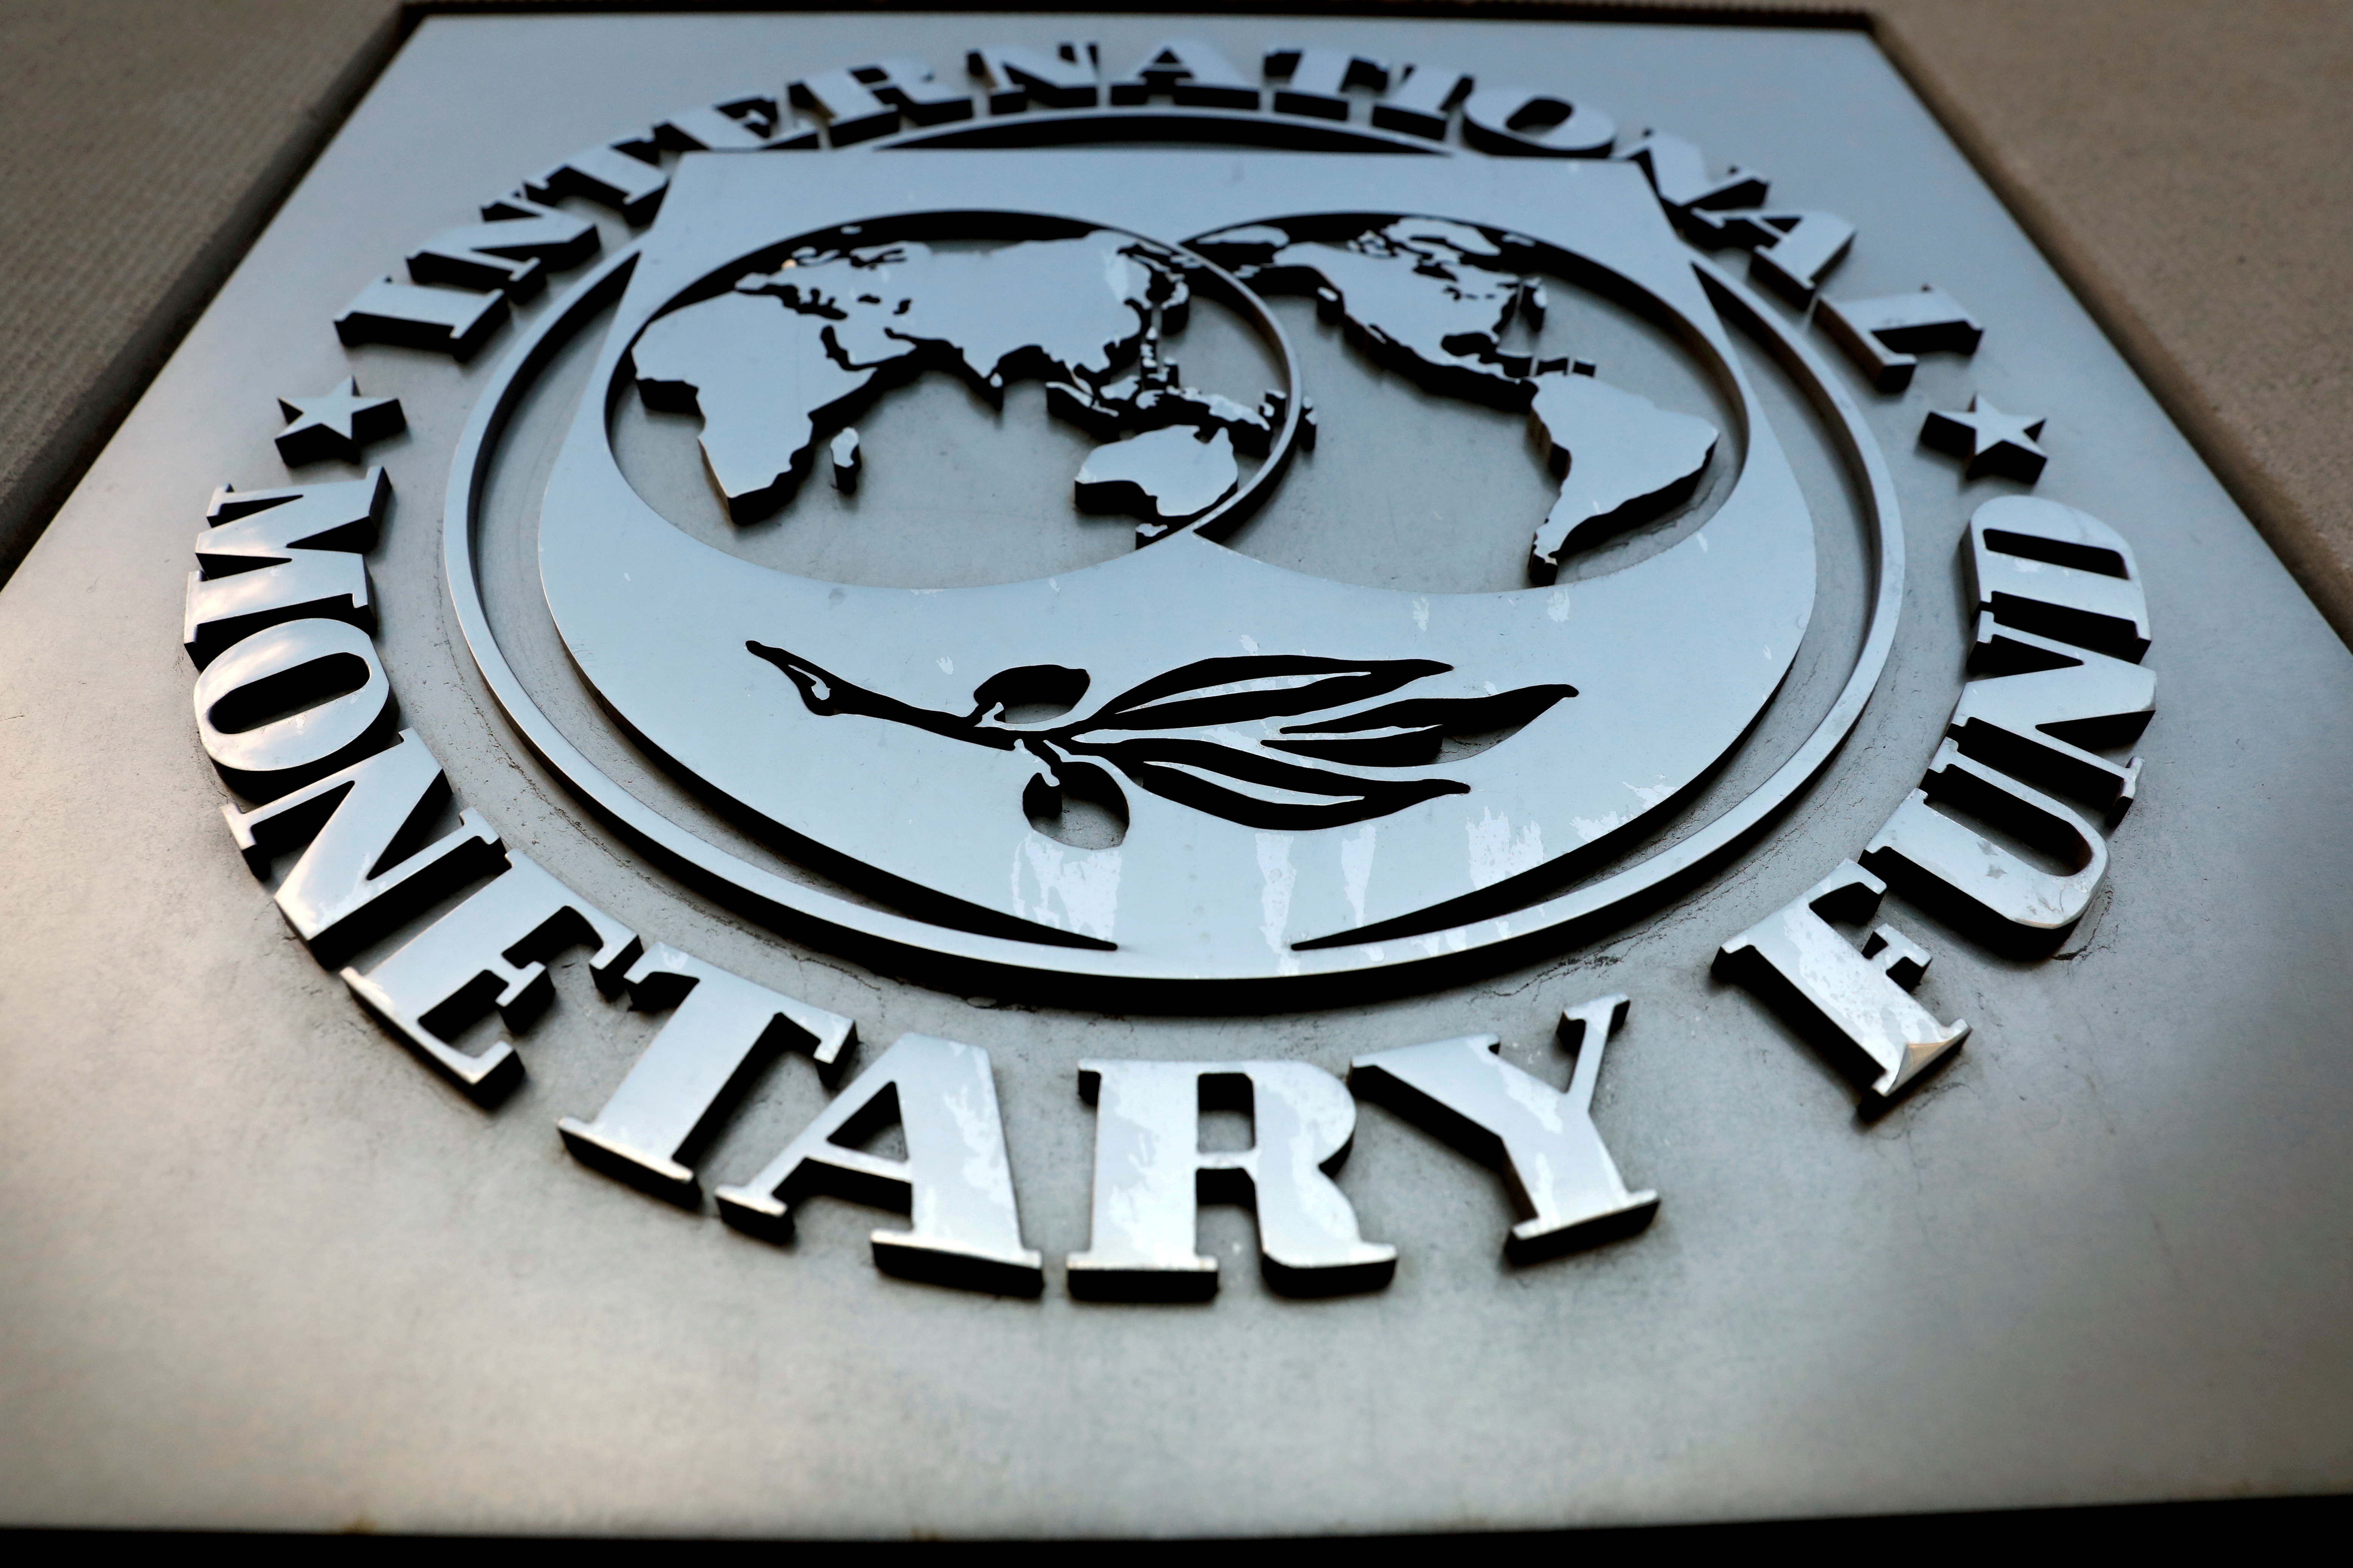  The International Monetary Fund (IMF) logo is seen outside the headquarters building in Washington, U.S., September 4, 2018. REUTERS/Yuri Gripas/File Photo